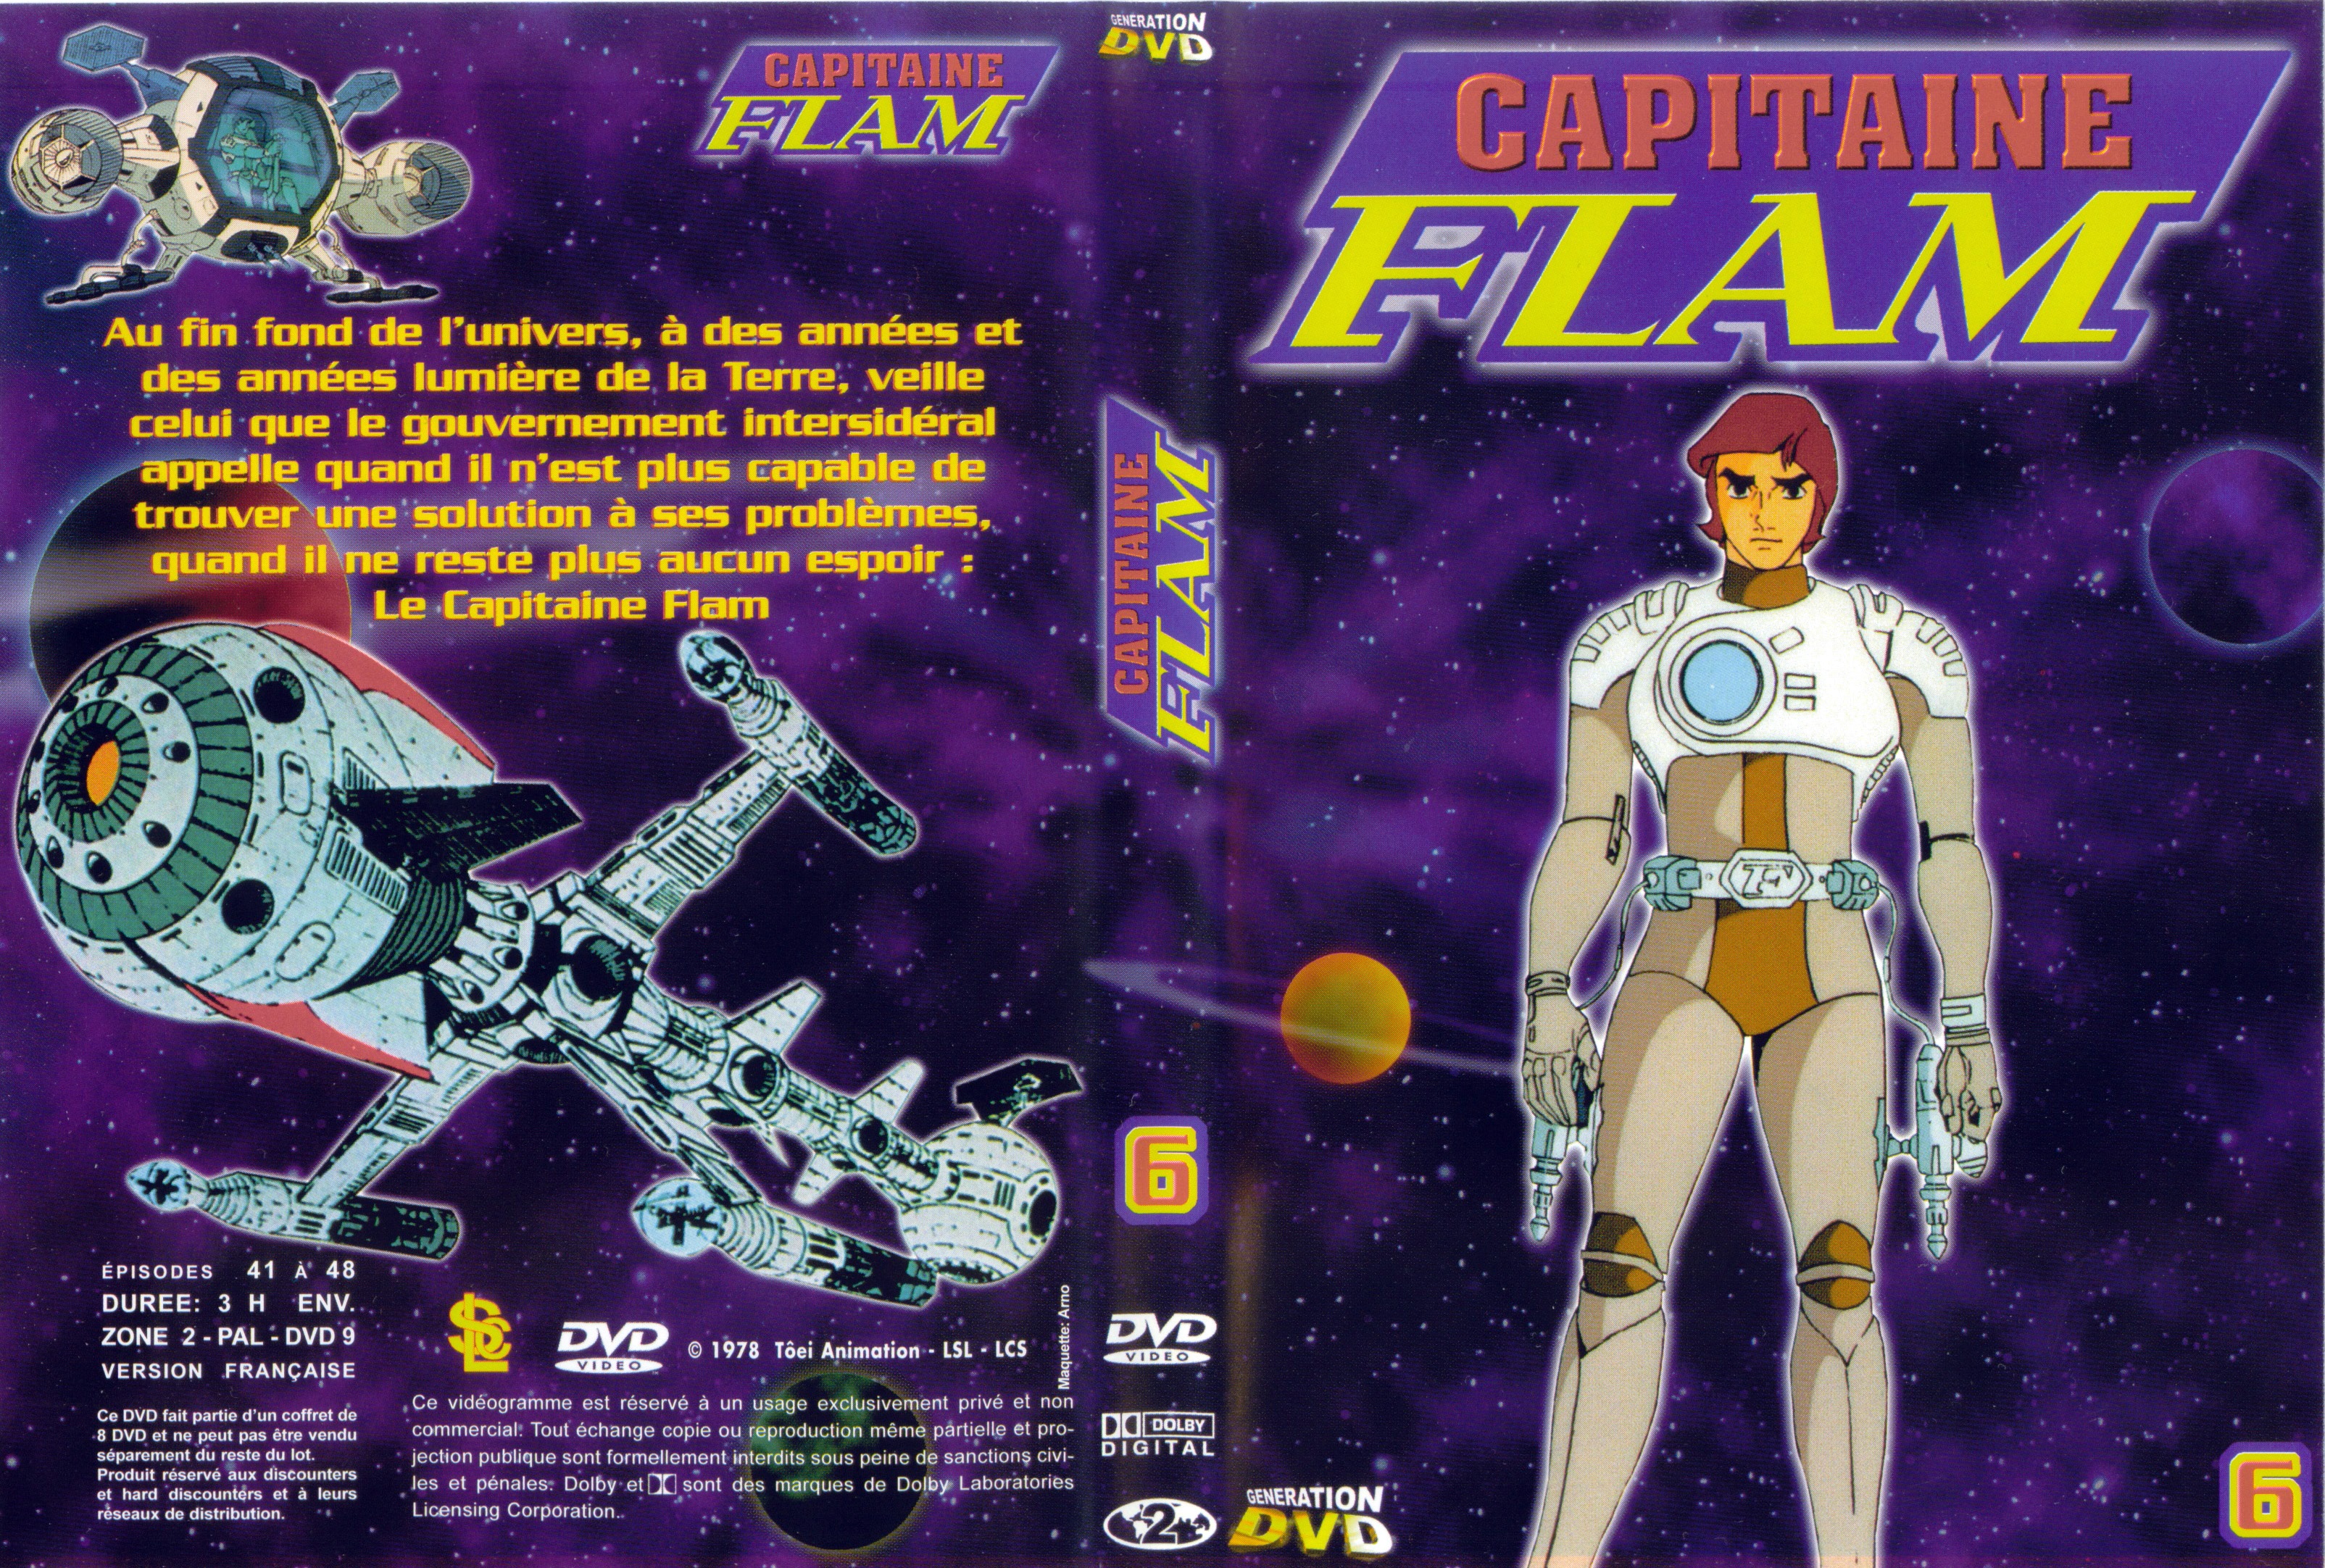 Jaquette DVD Capitaine Flam vol 6 (GENERATION DVD)